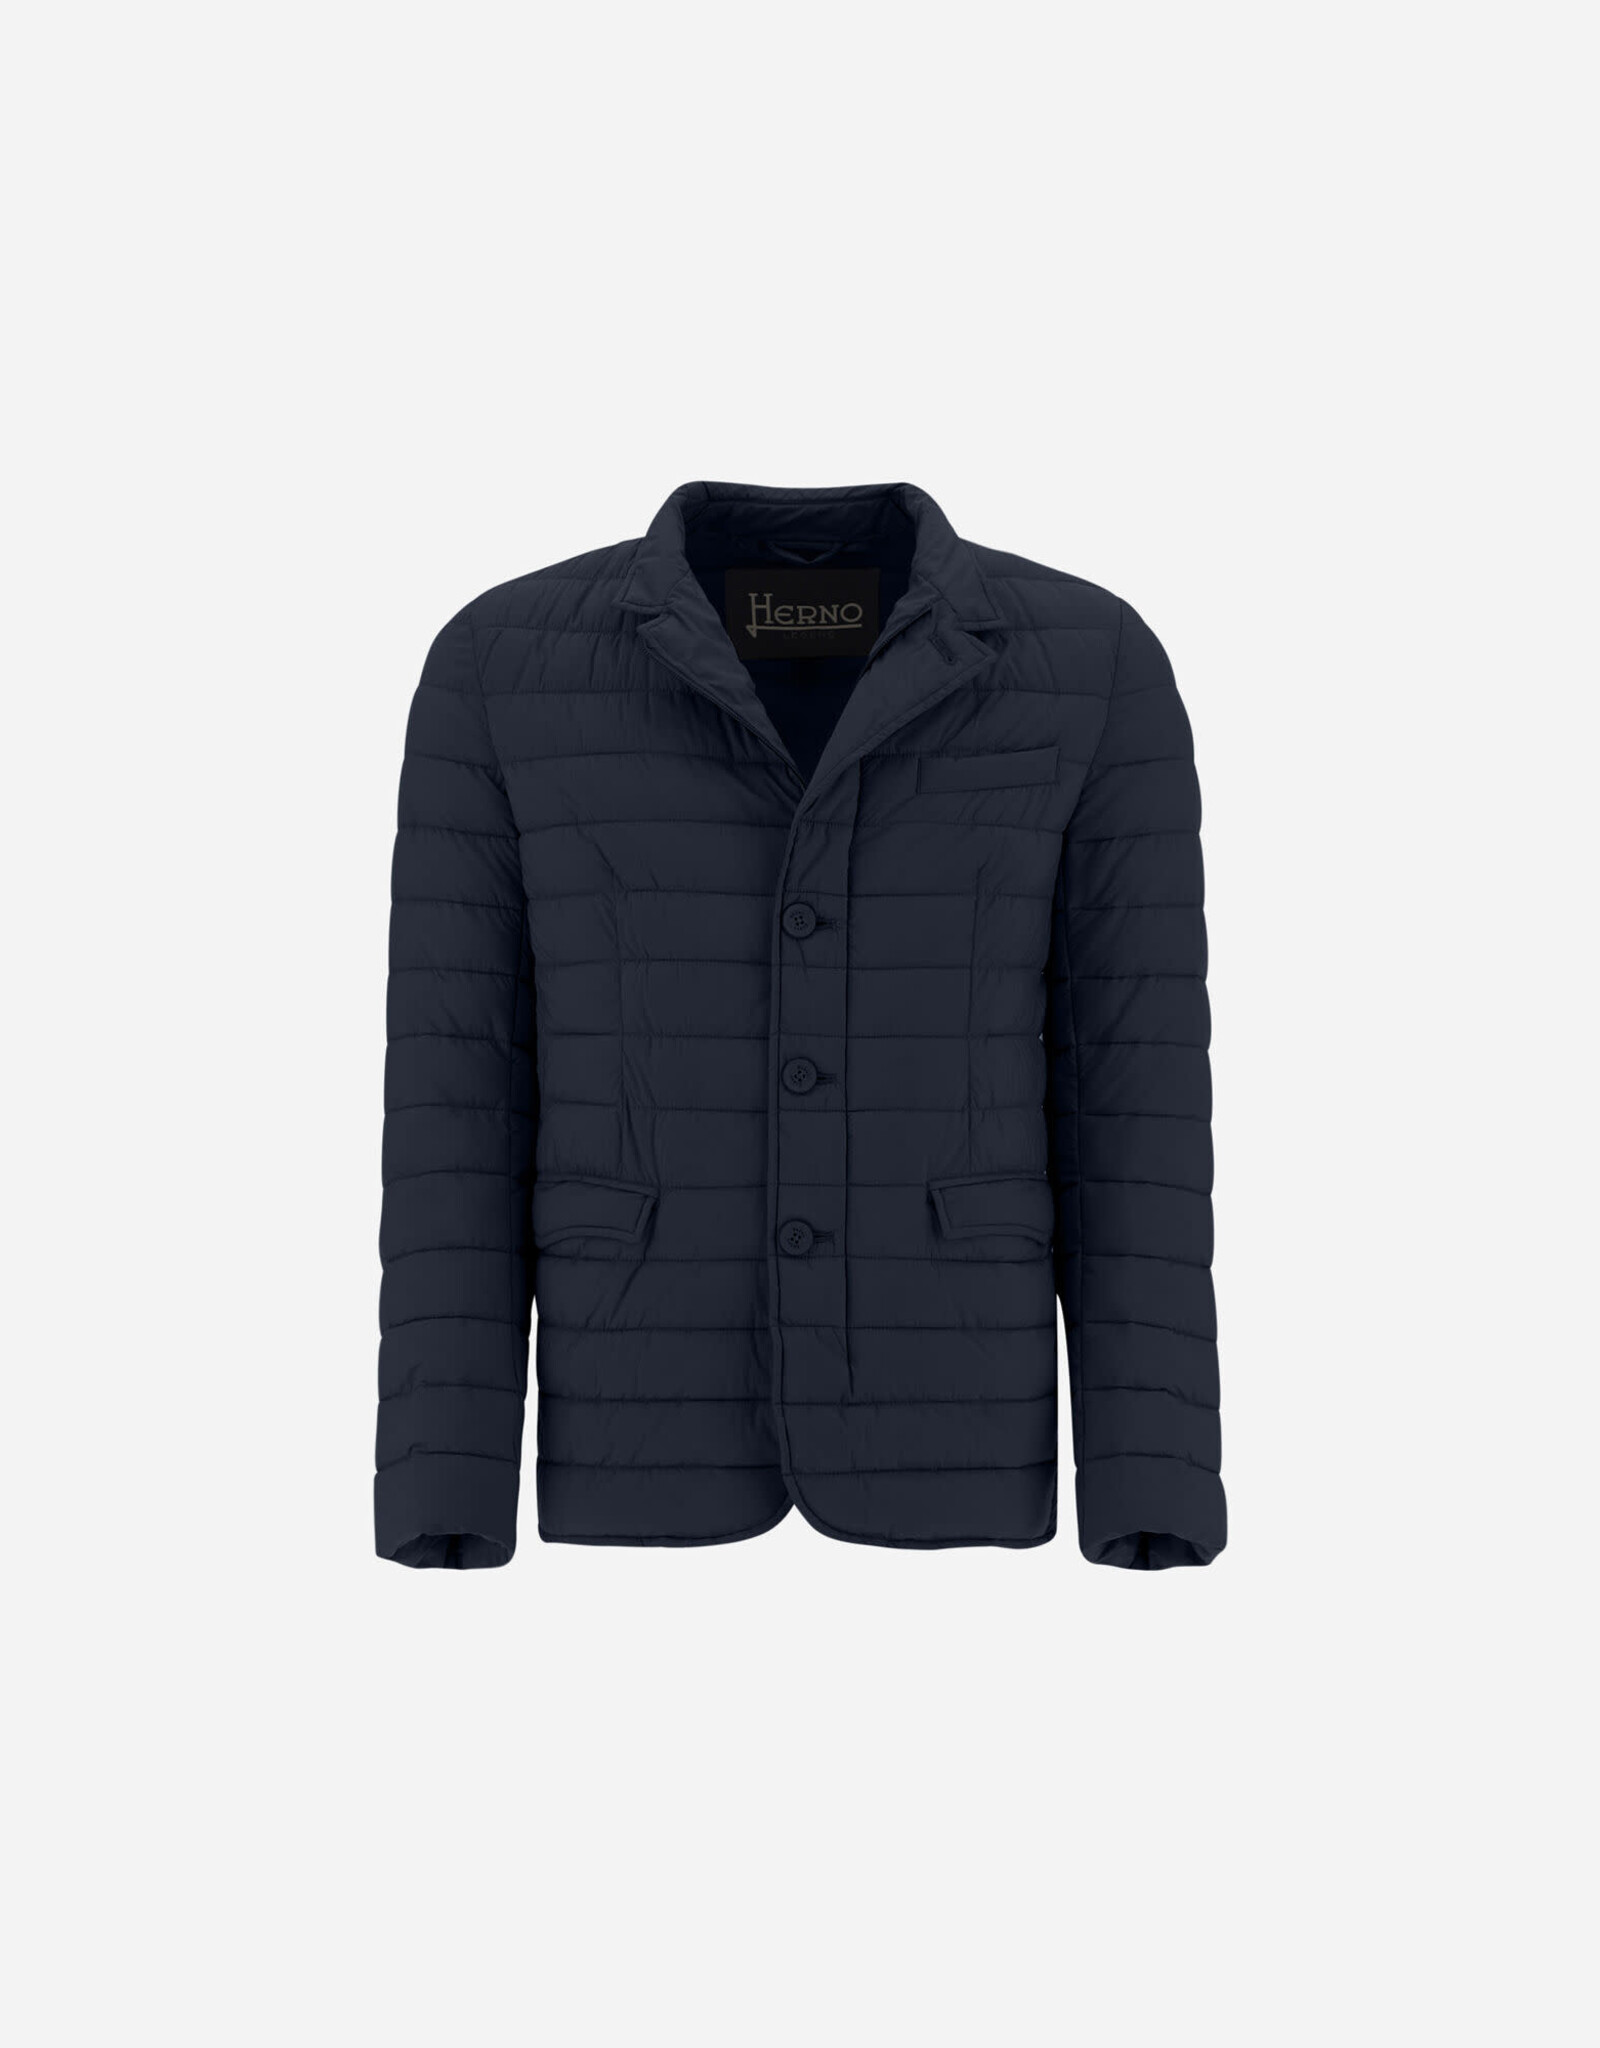 Herno Herno blazer jacket blue PC002ULE 19288 9250